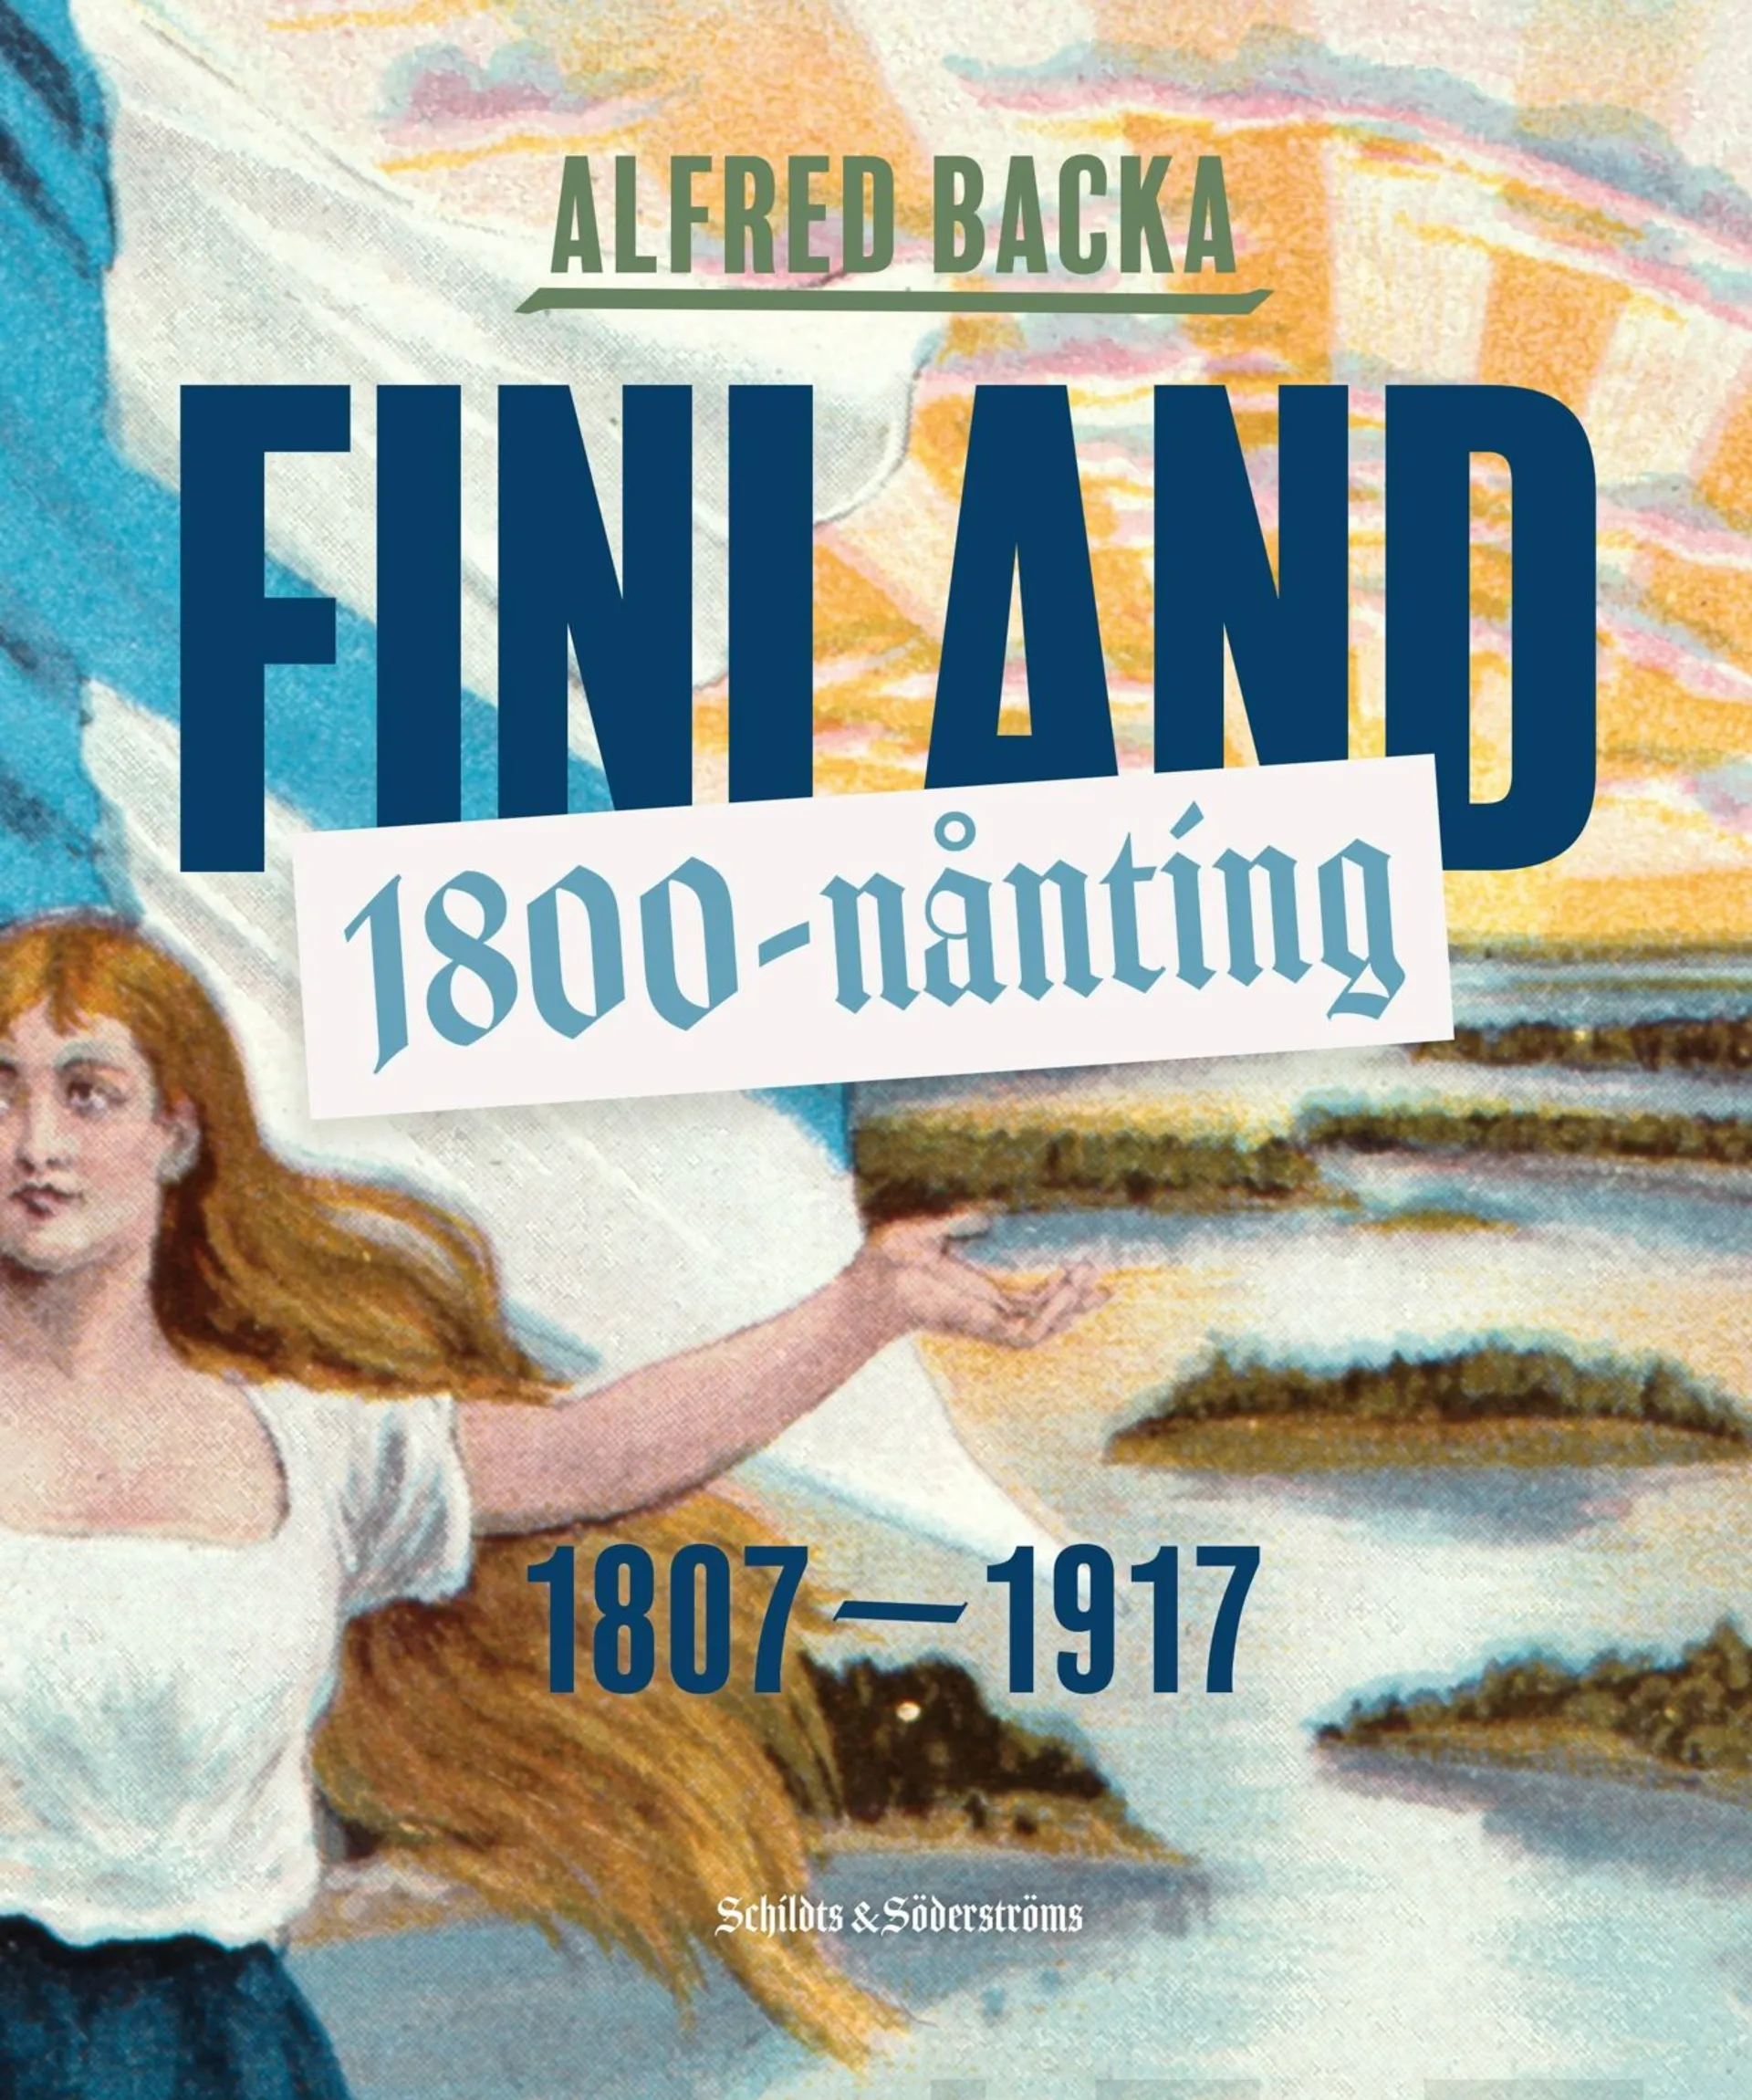 Backa, Finland 1800-nånting